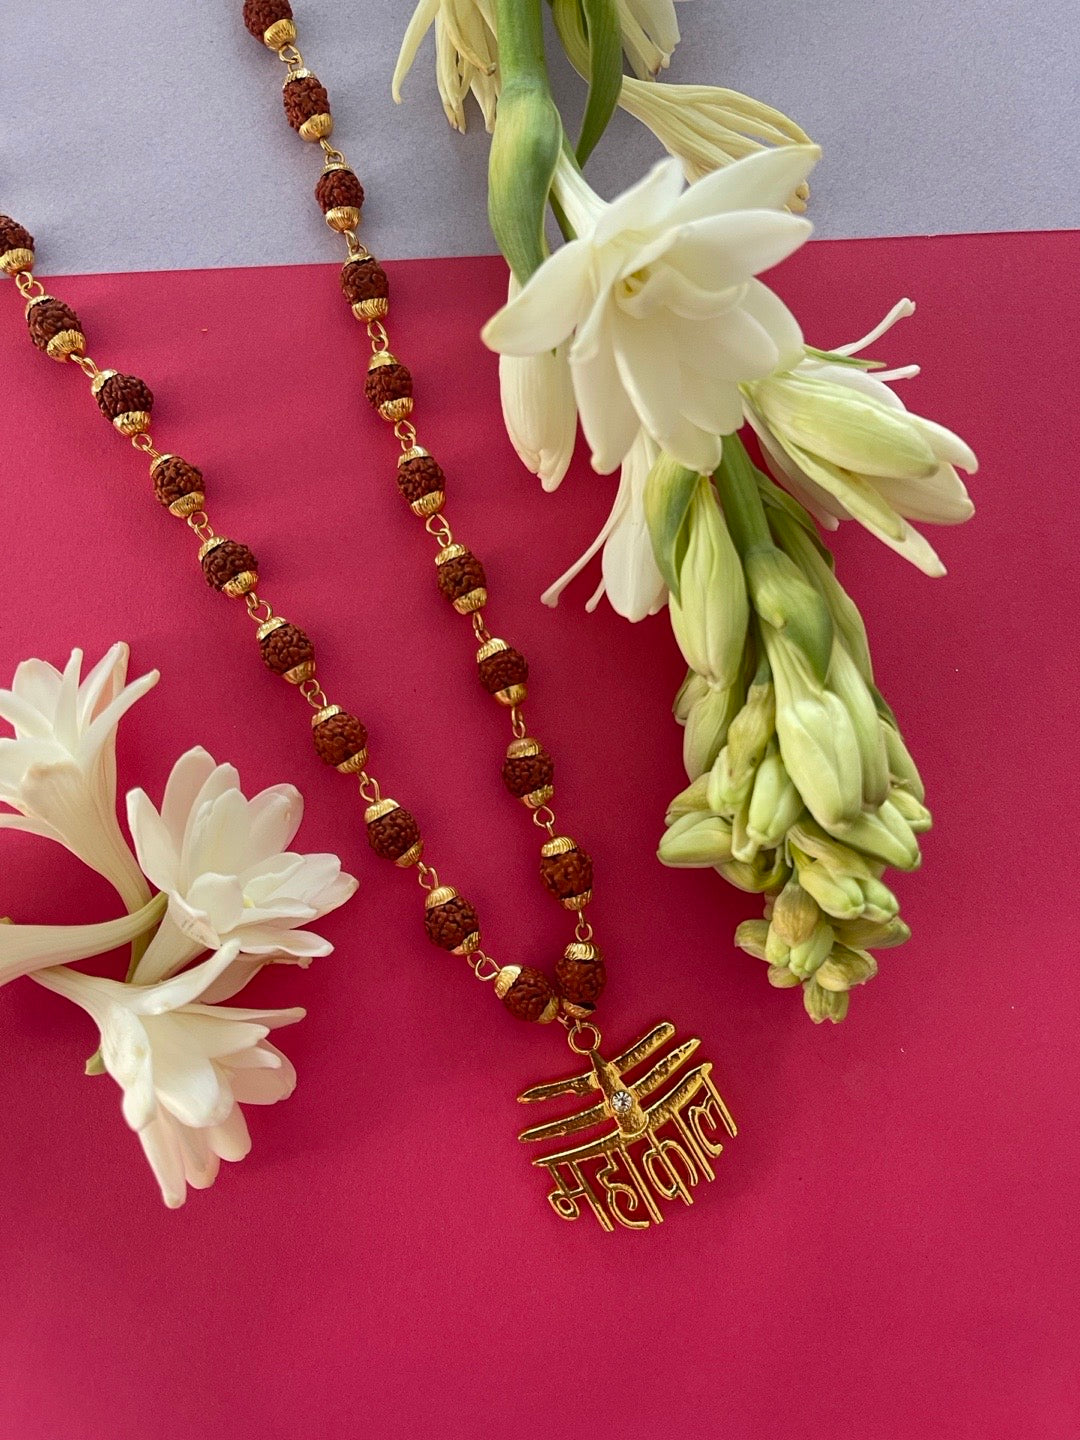 Gold-Plated Brown Beads Brass Lord Shiva Mahakal Locket Wood Pendant for Men & Women